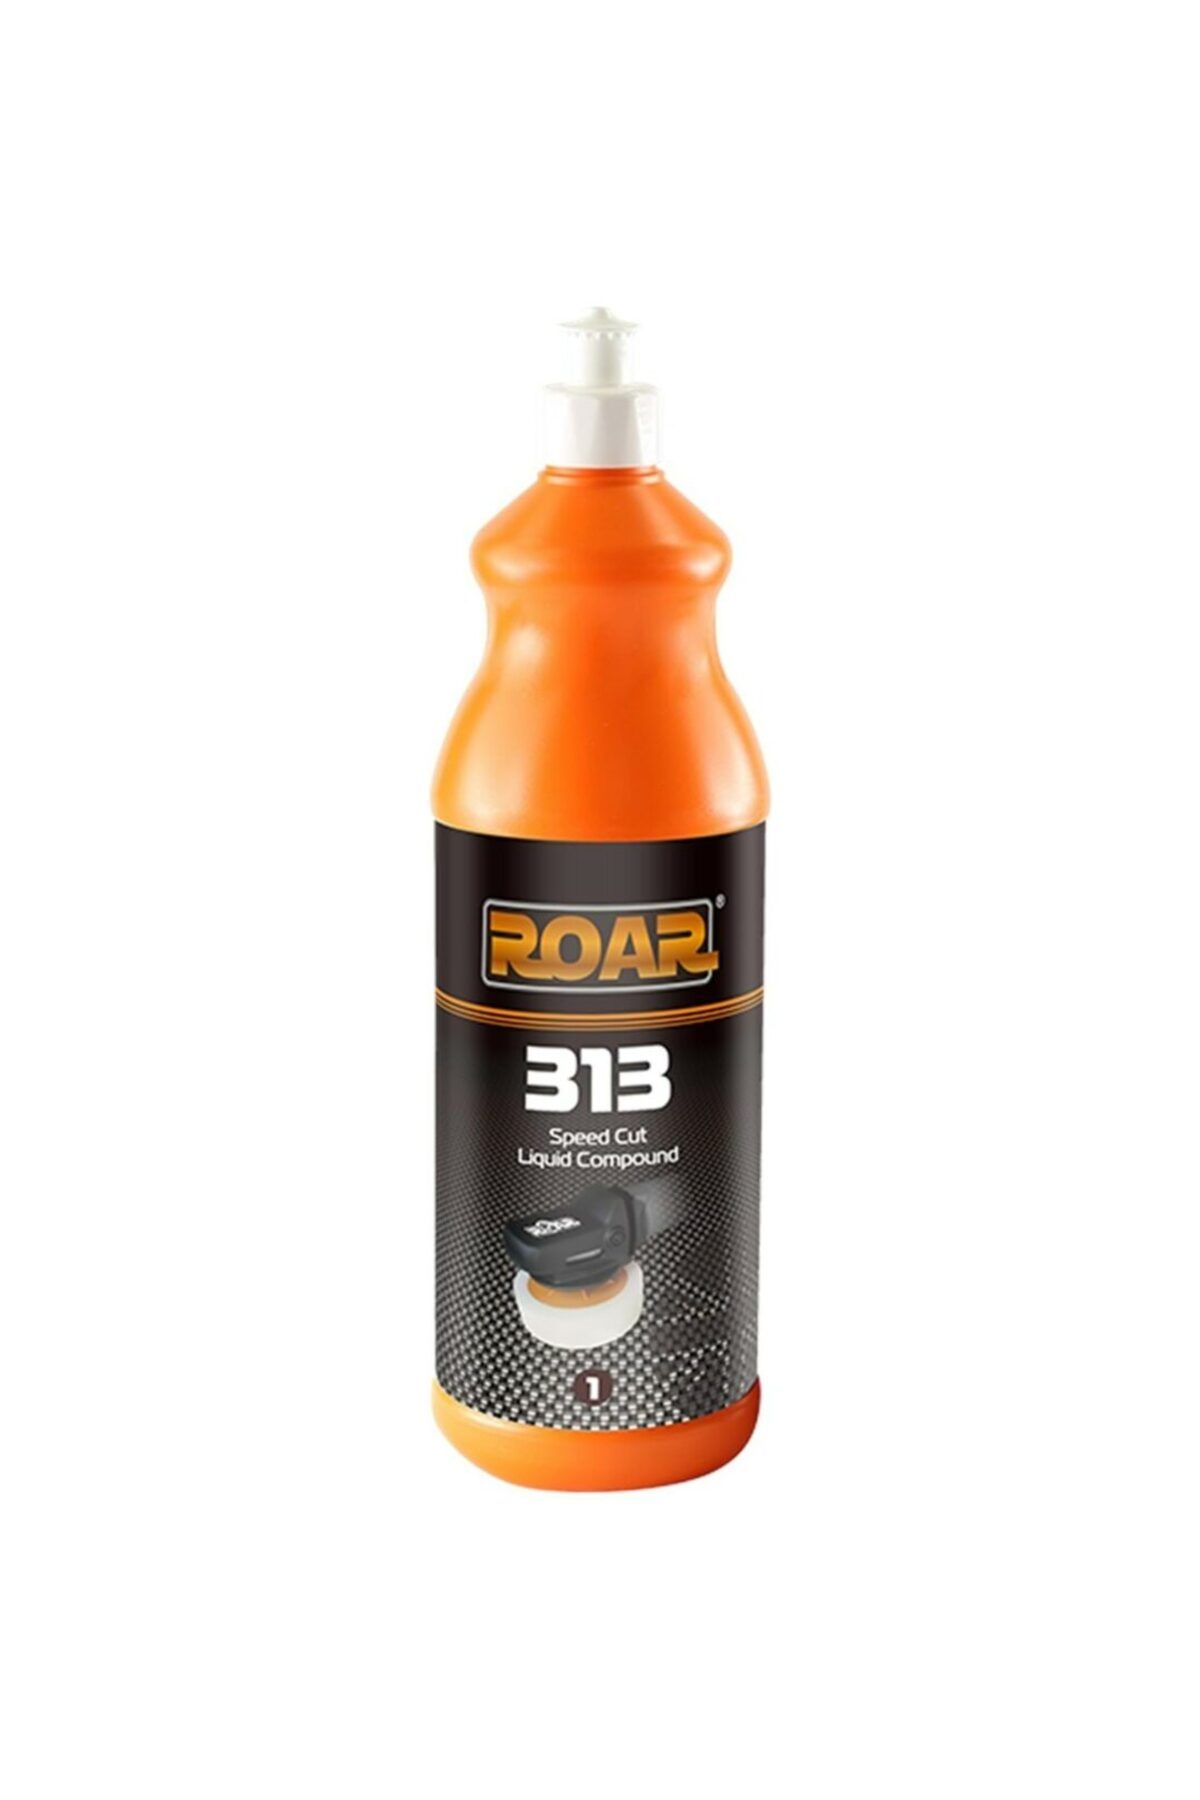 roar 313 Speed Cut Liquid Compound - Çizik Çıkarıcı Pasta 250 gr